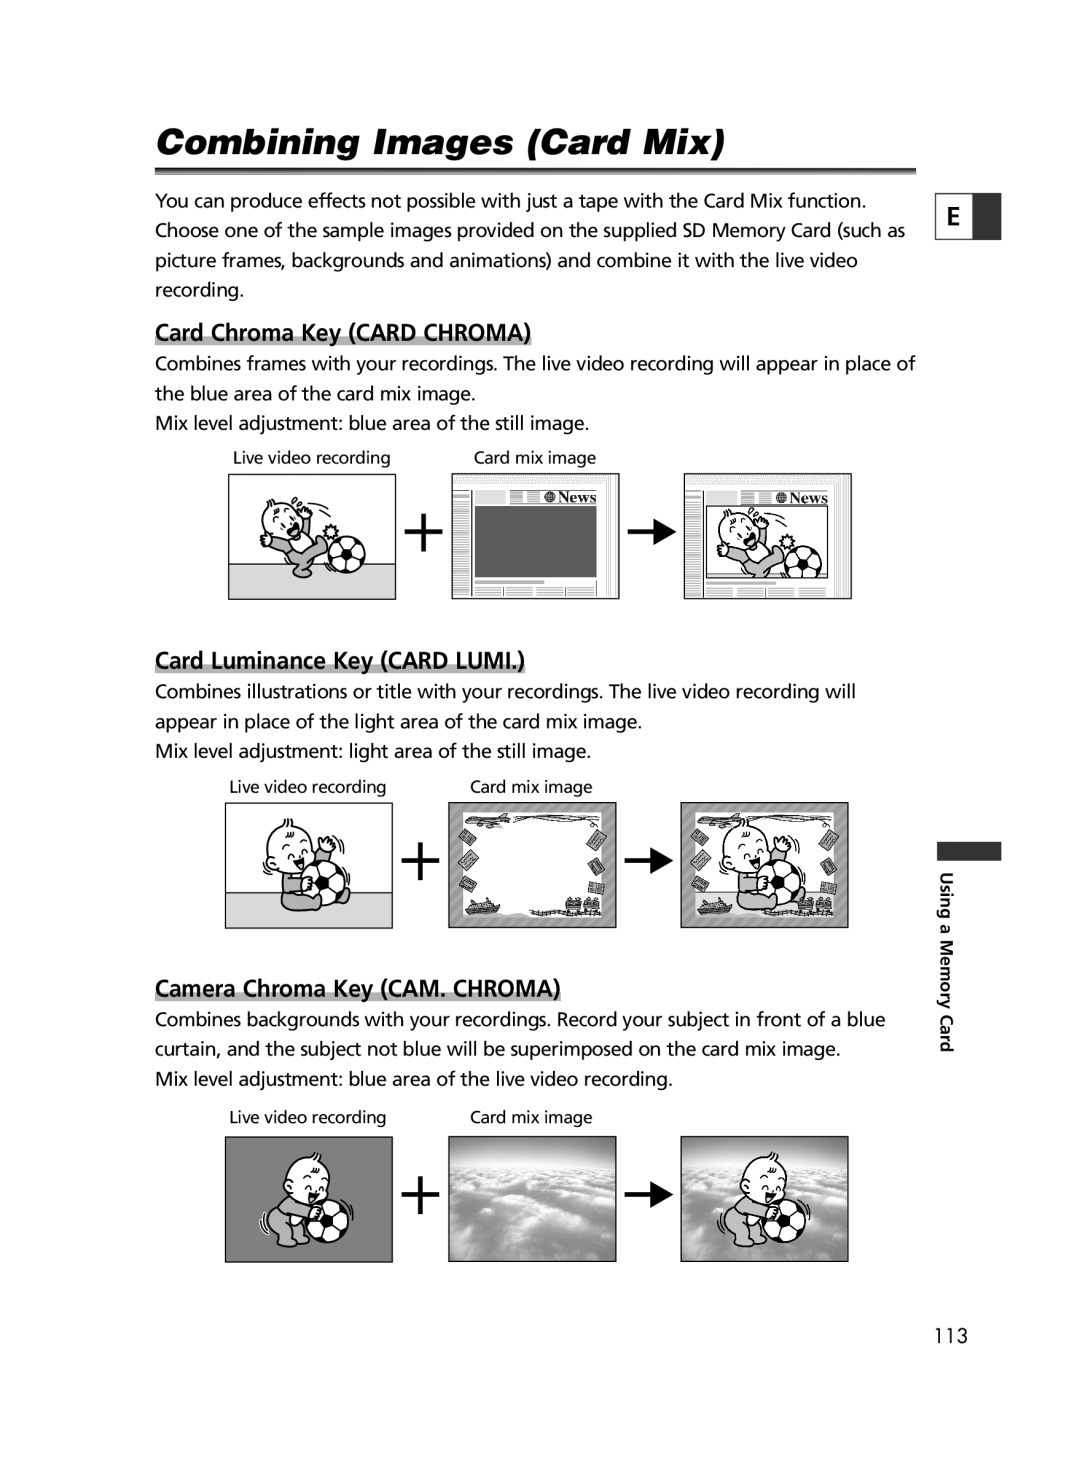 Canon 65, 60 instruction manual Combining Images Card Mix, Card Chroma Key CARD CHROMA, Card Luminance Key CARD LUMI 